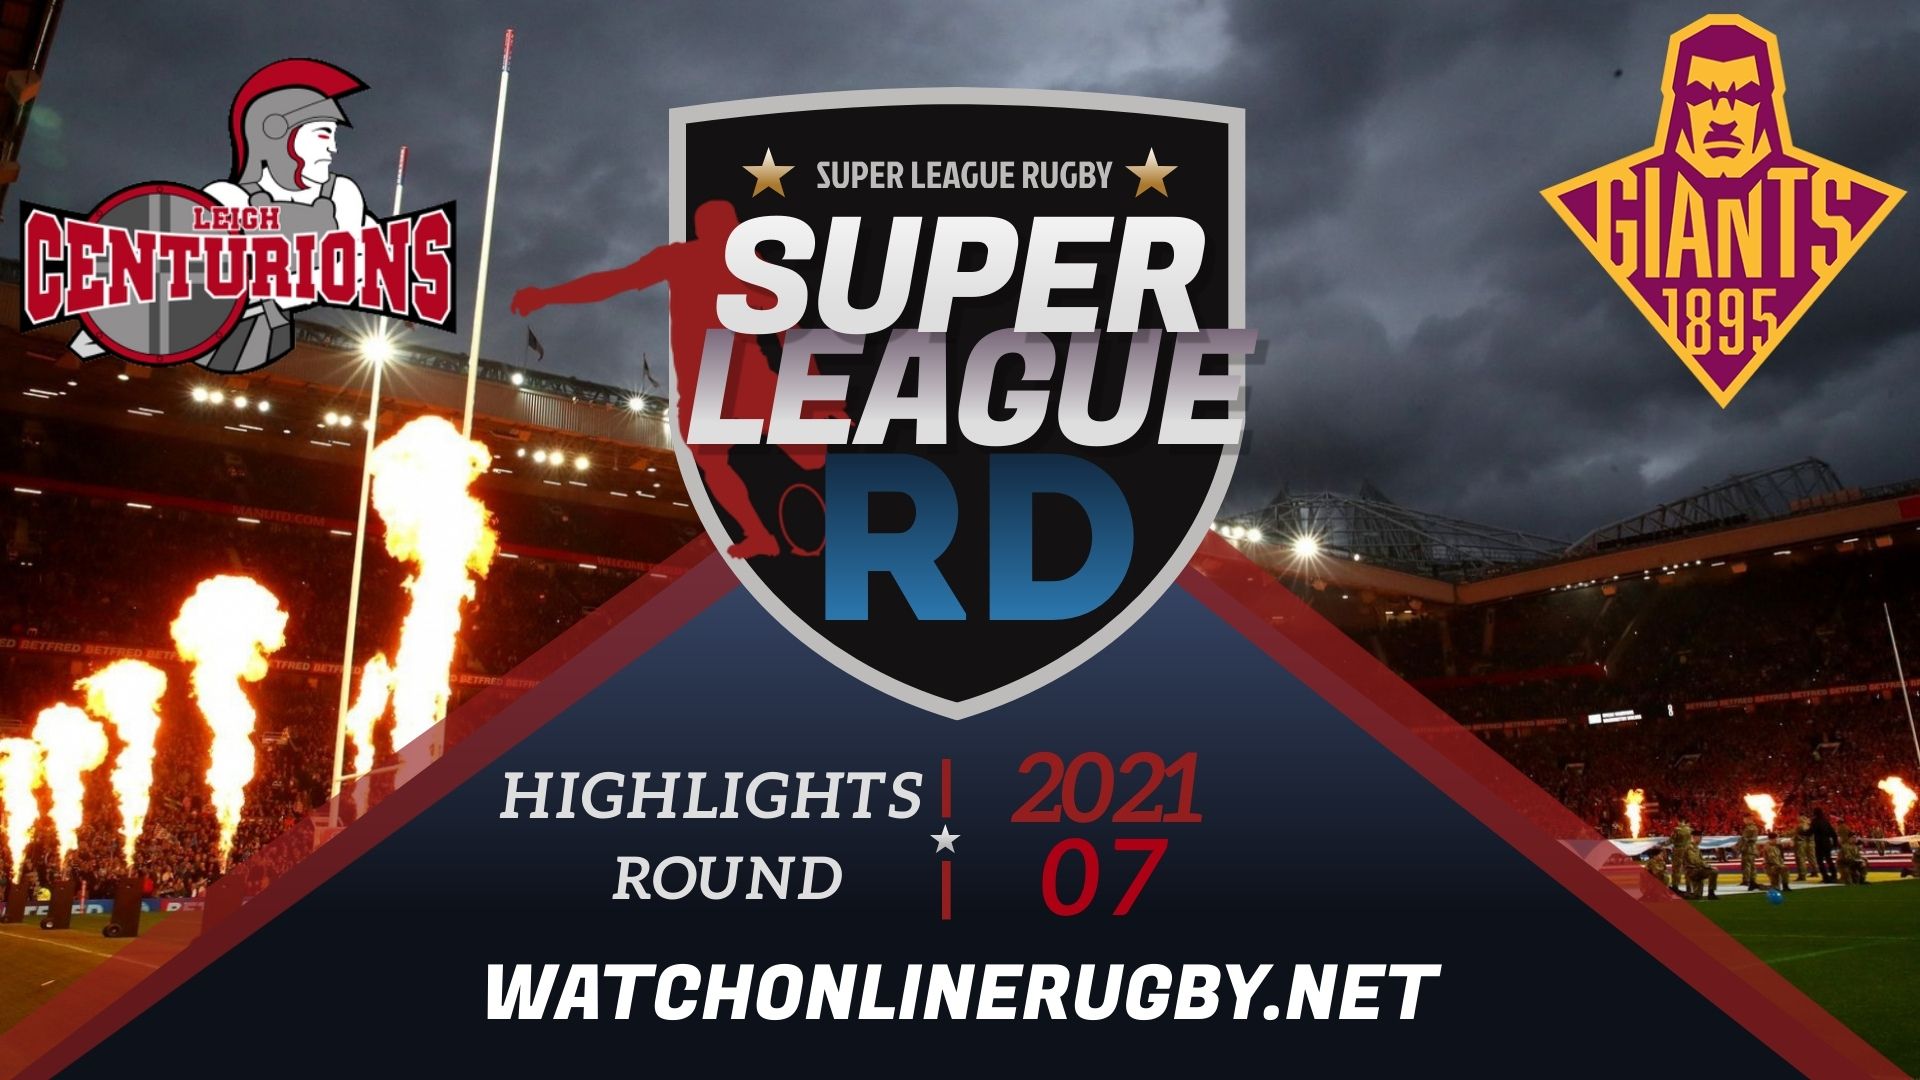 Leigh Centurions Vs Huddersfield Giants Super League Rugby 2021 RD 7